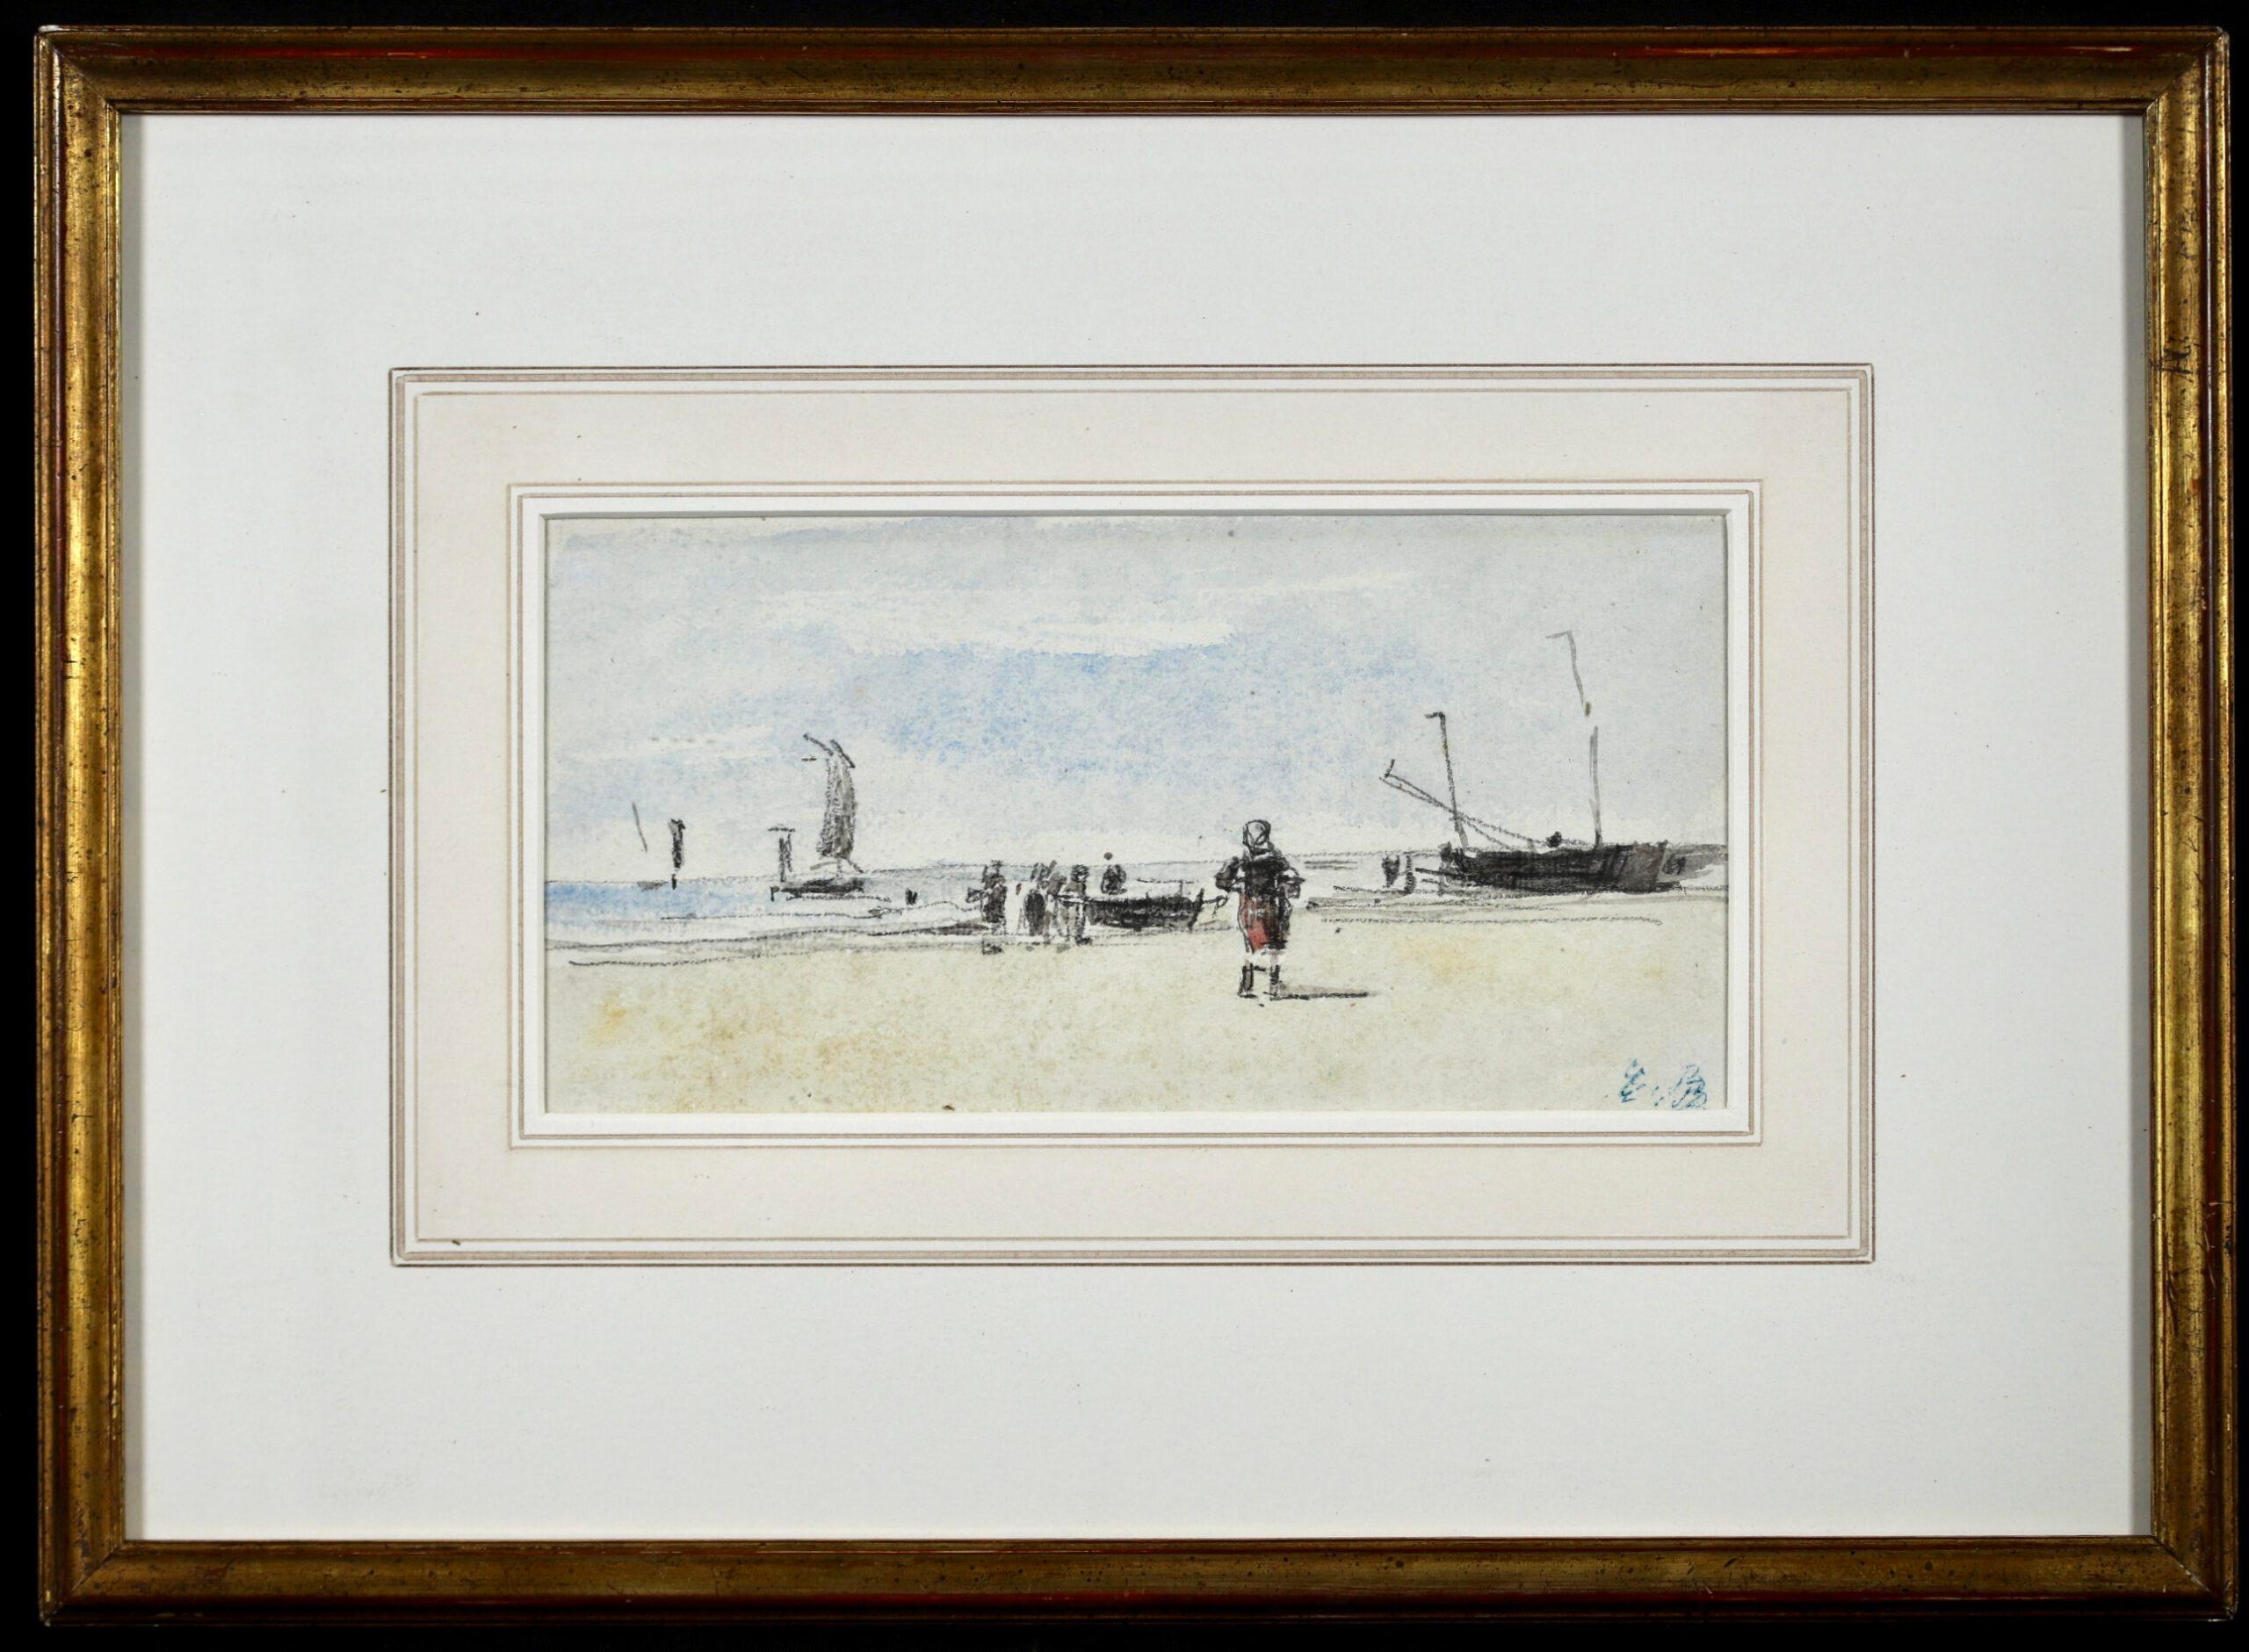 Figures on a beach - Impressionist Landscape Watercolor by Eugene Boudin - Art by Eugène Louis Boudin